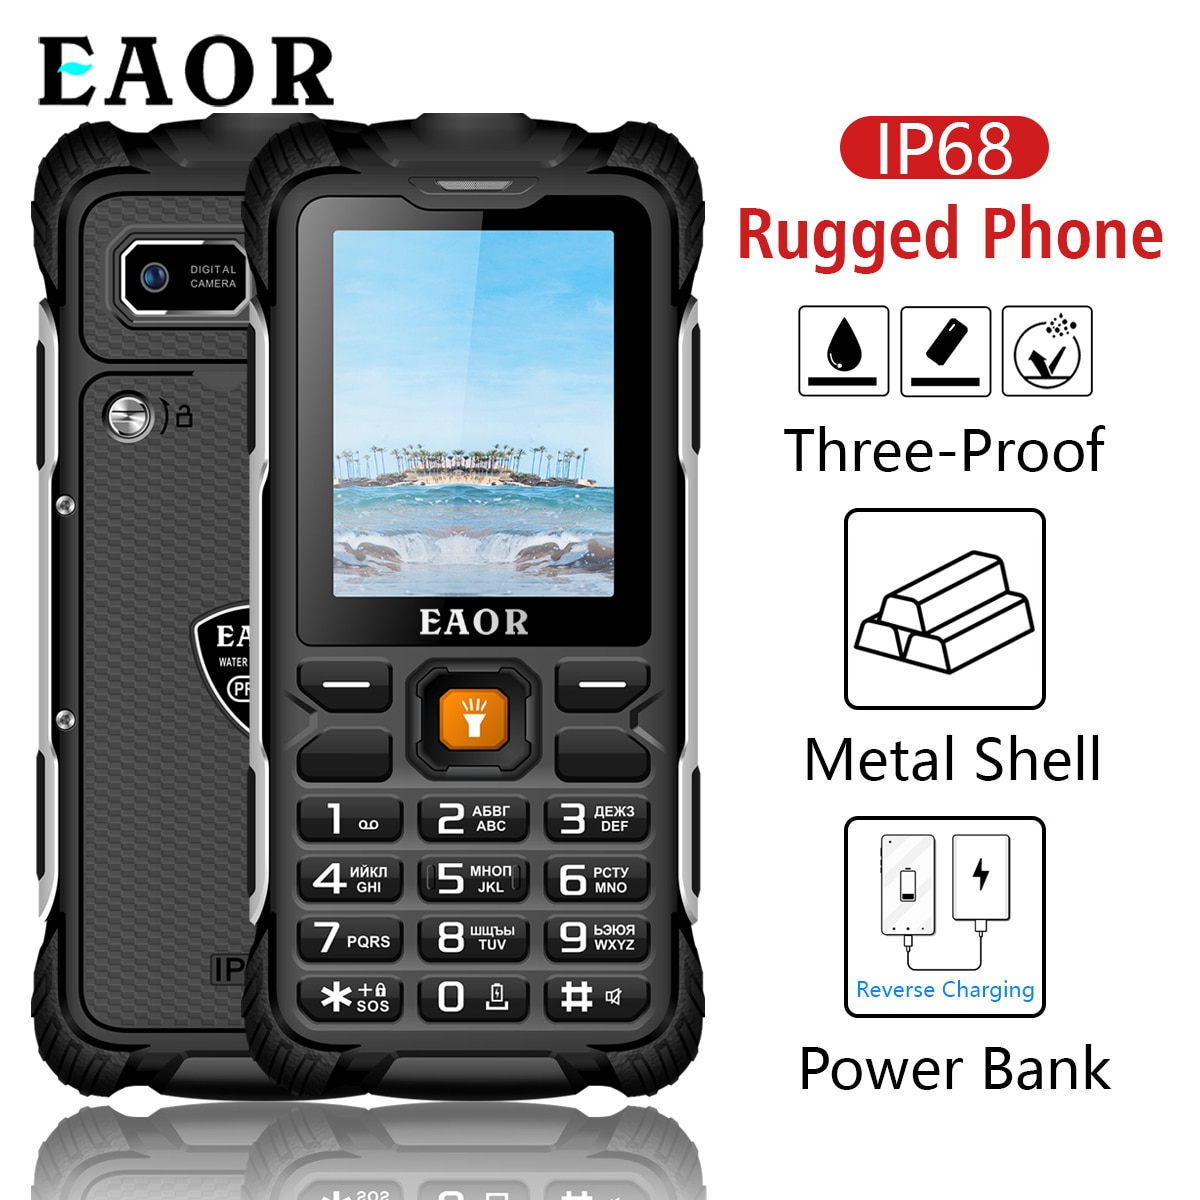 EAOR IP68 Water/Dust-proof Rugged Phone Dual SIM Card 2G Feature Phone 3000mAh Battery Support Reverse Charging Keypad Phone